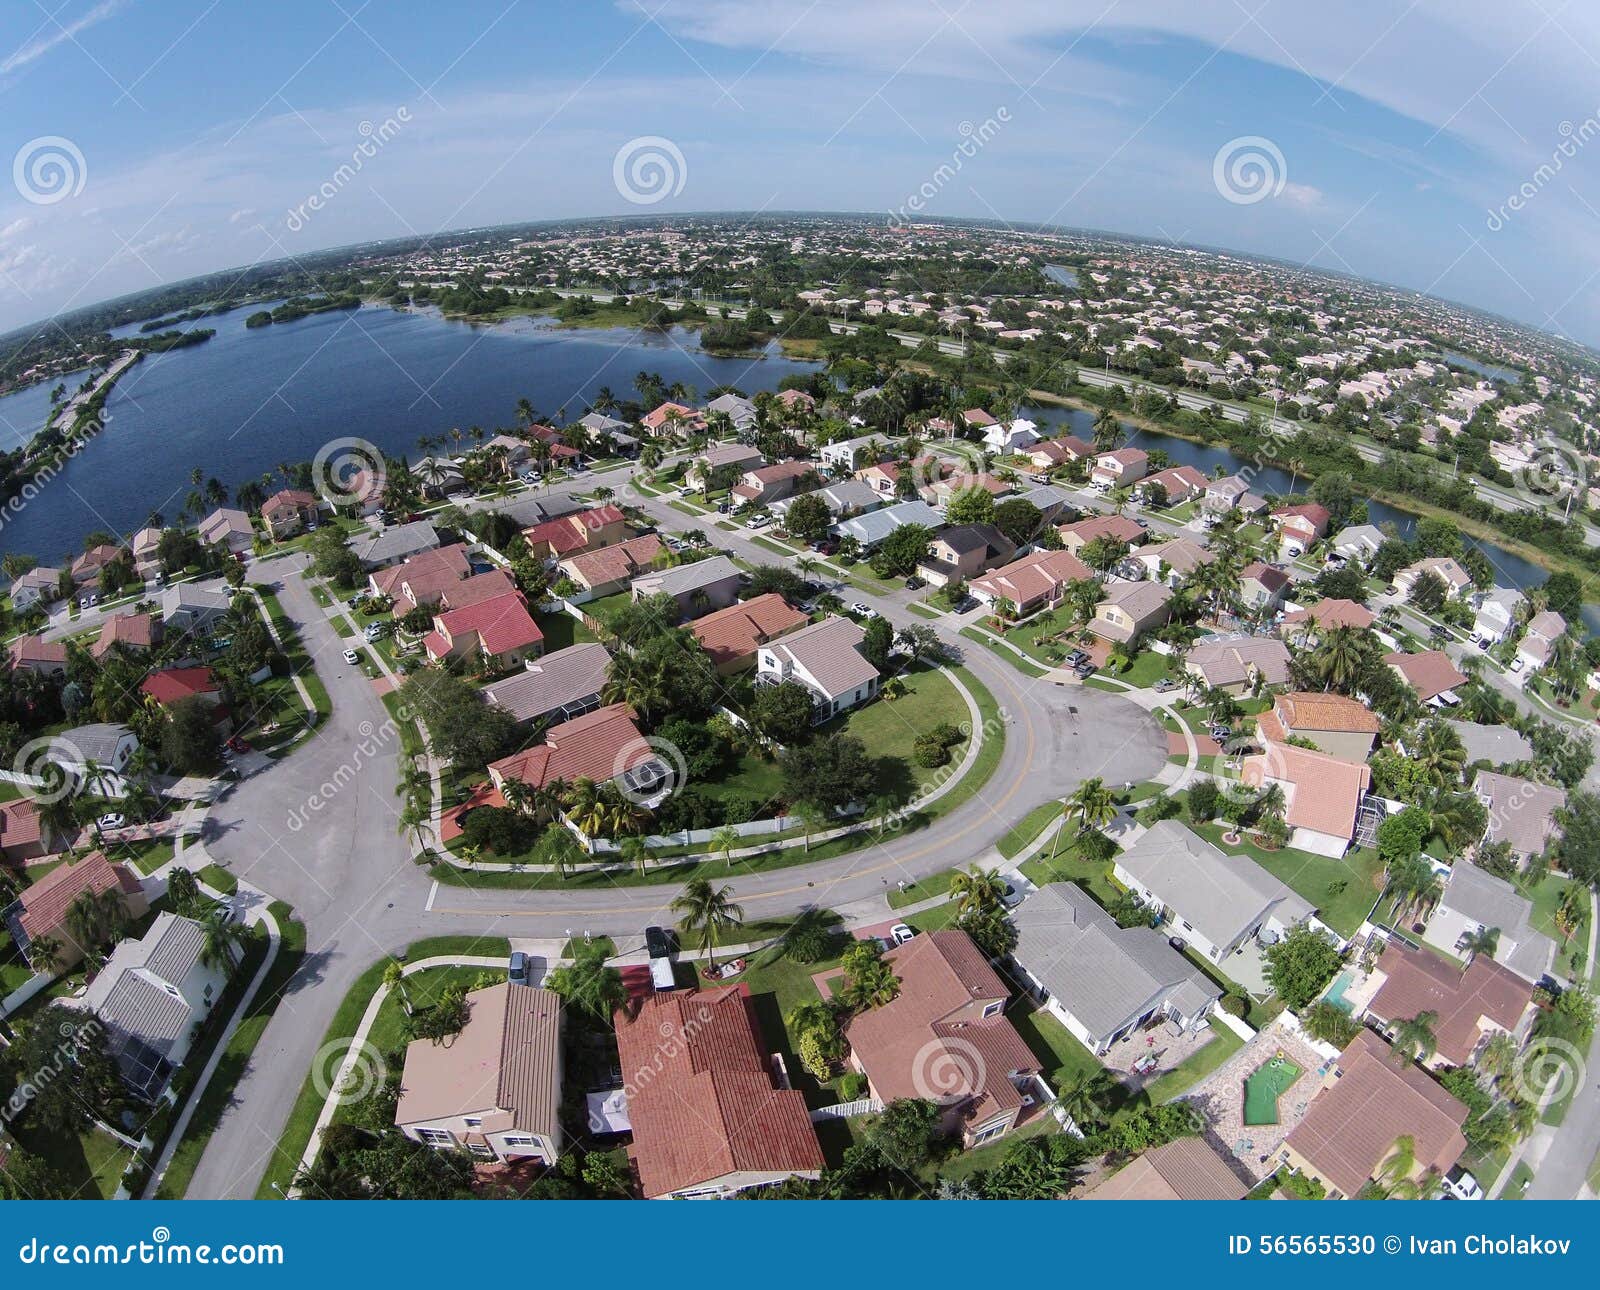 suburban homes in florida aerial